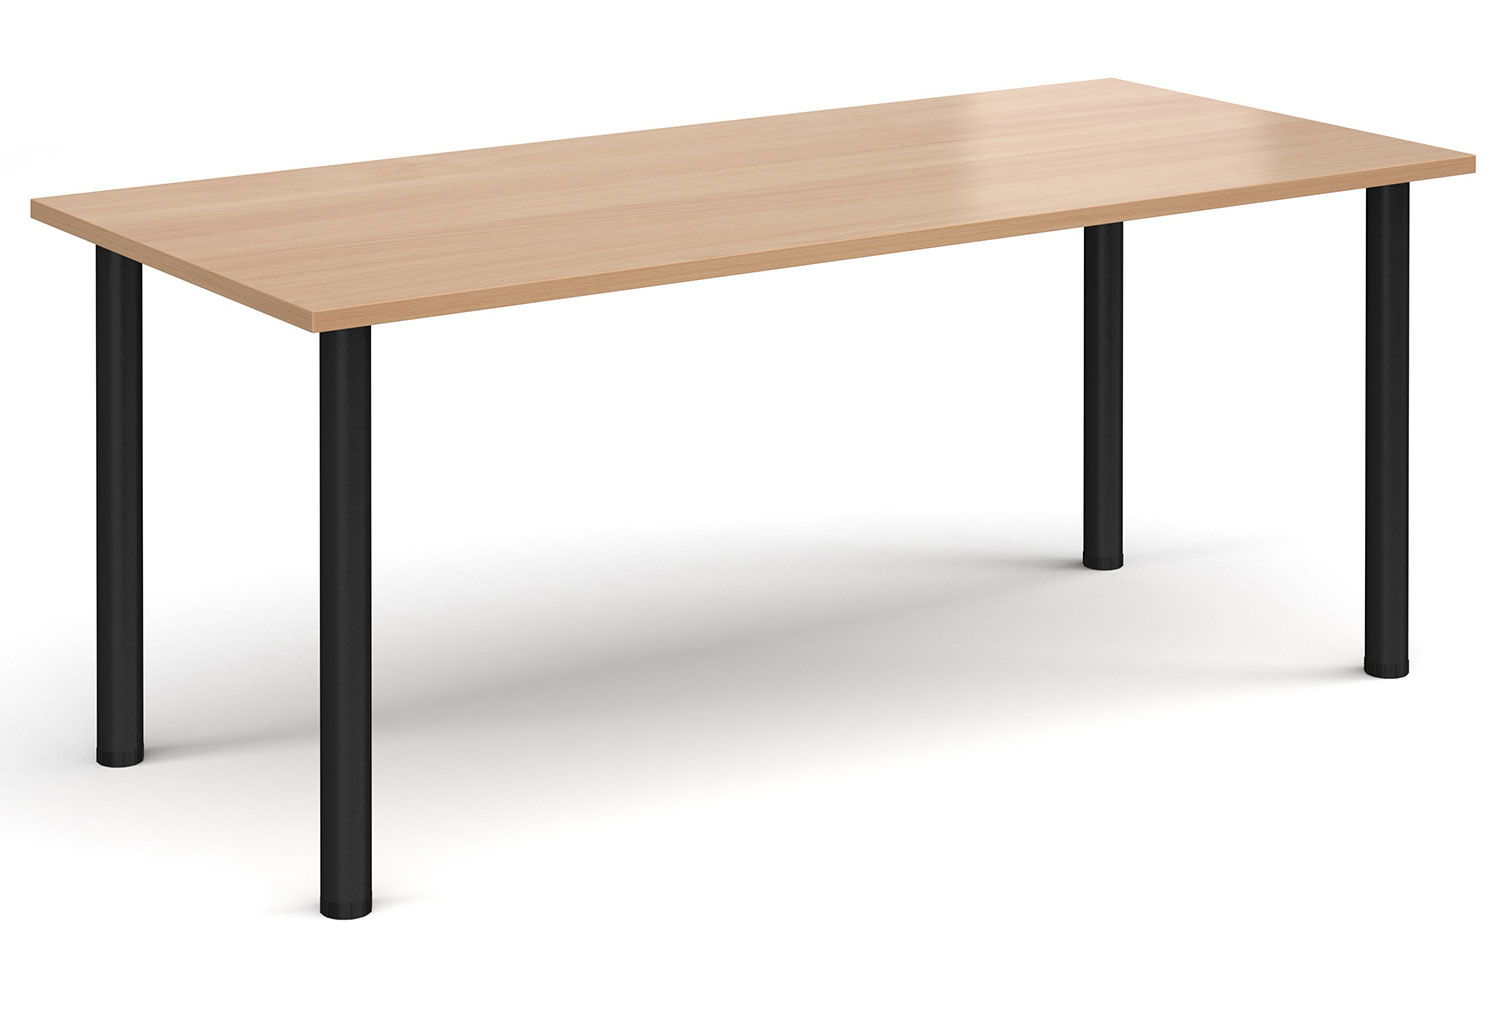 Rosetti Rectangular Meeting Table, 180wx80dx73h (cm), Beech